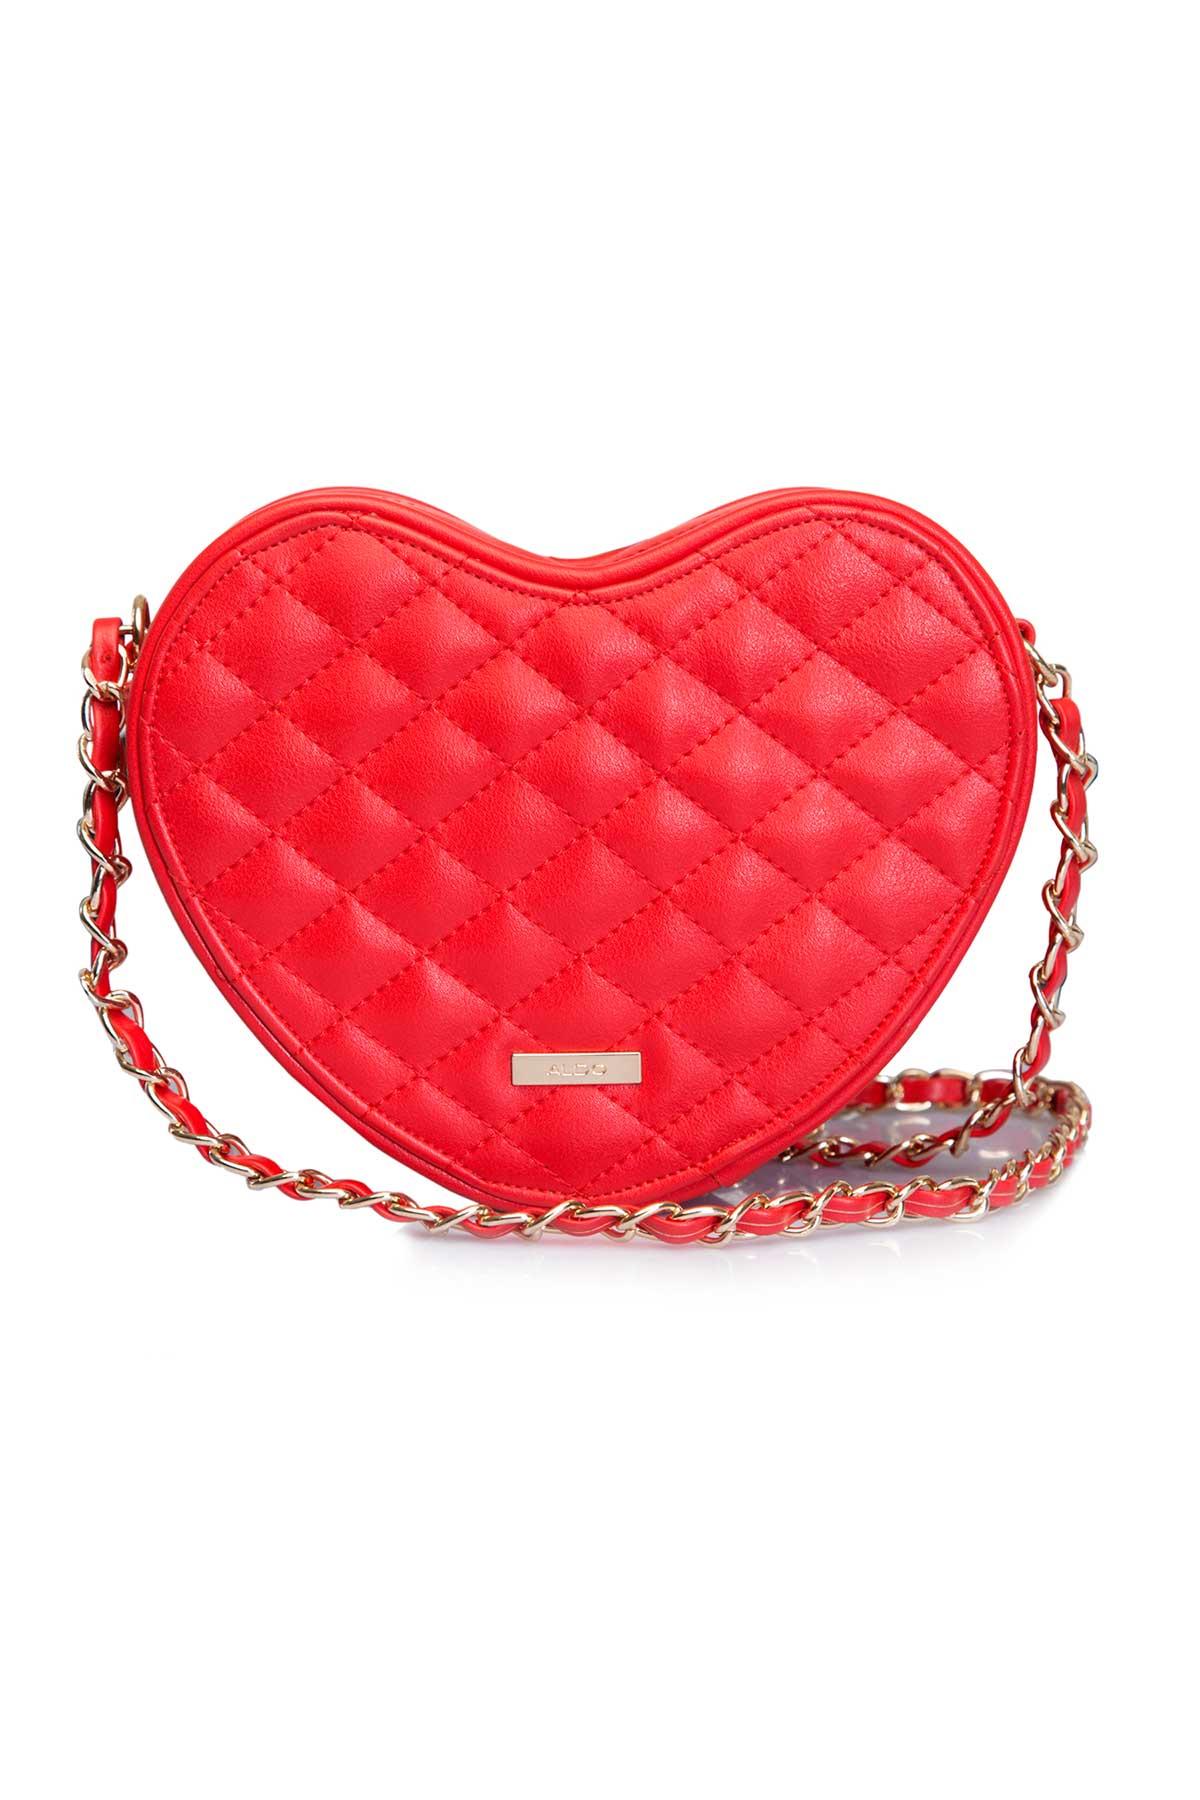 Vintage Aldo Handbag Red Leather Clutch Purse Small Chic - Etsy